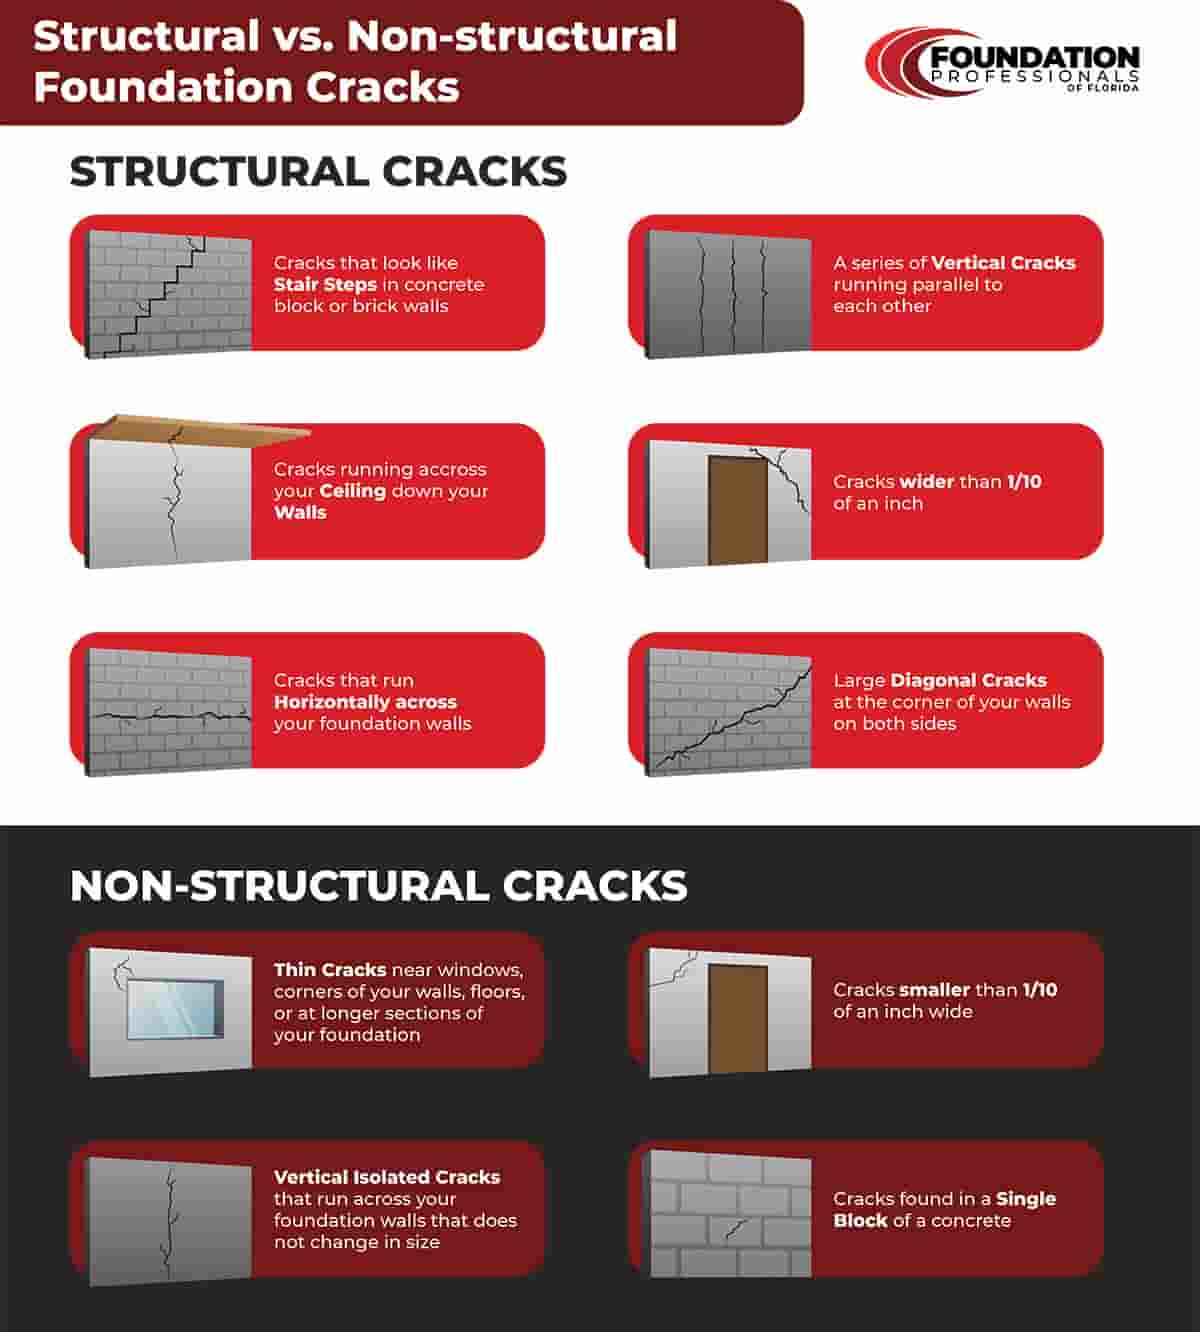 structural vs non-structural cracks foundation pros florida